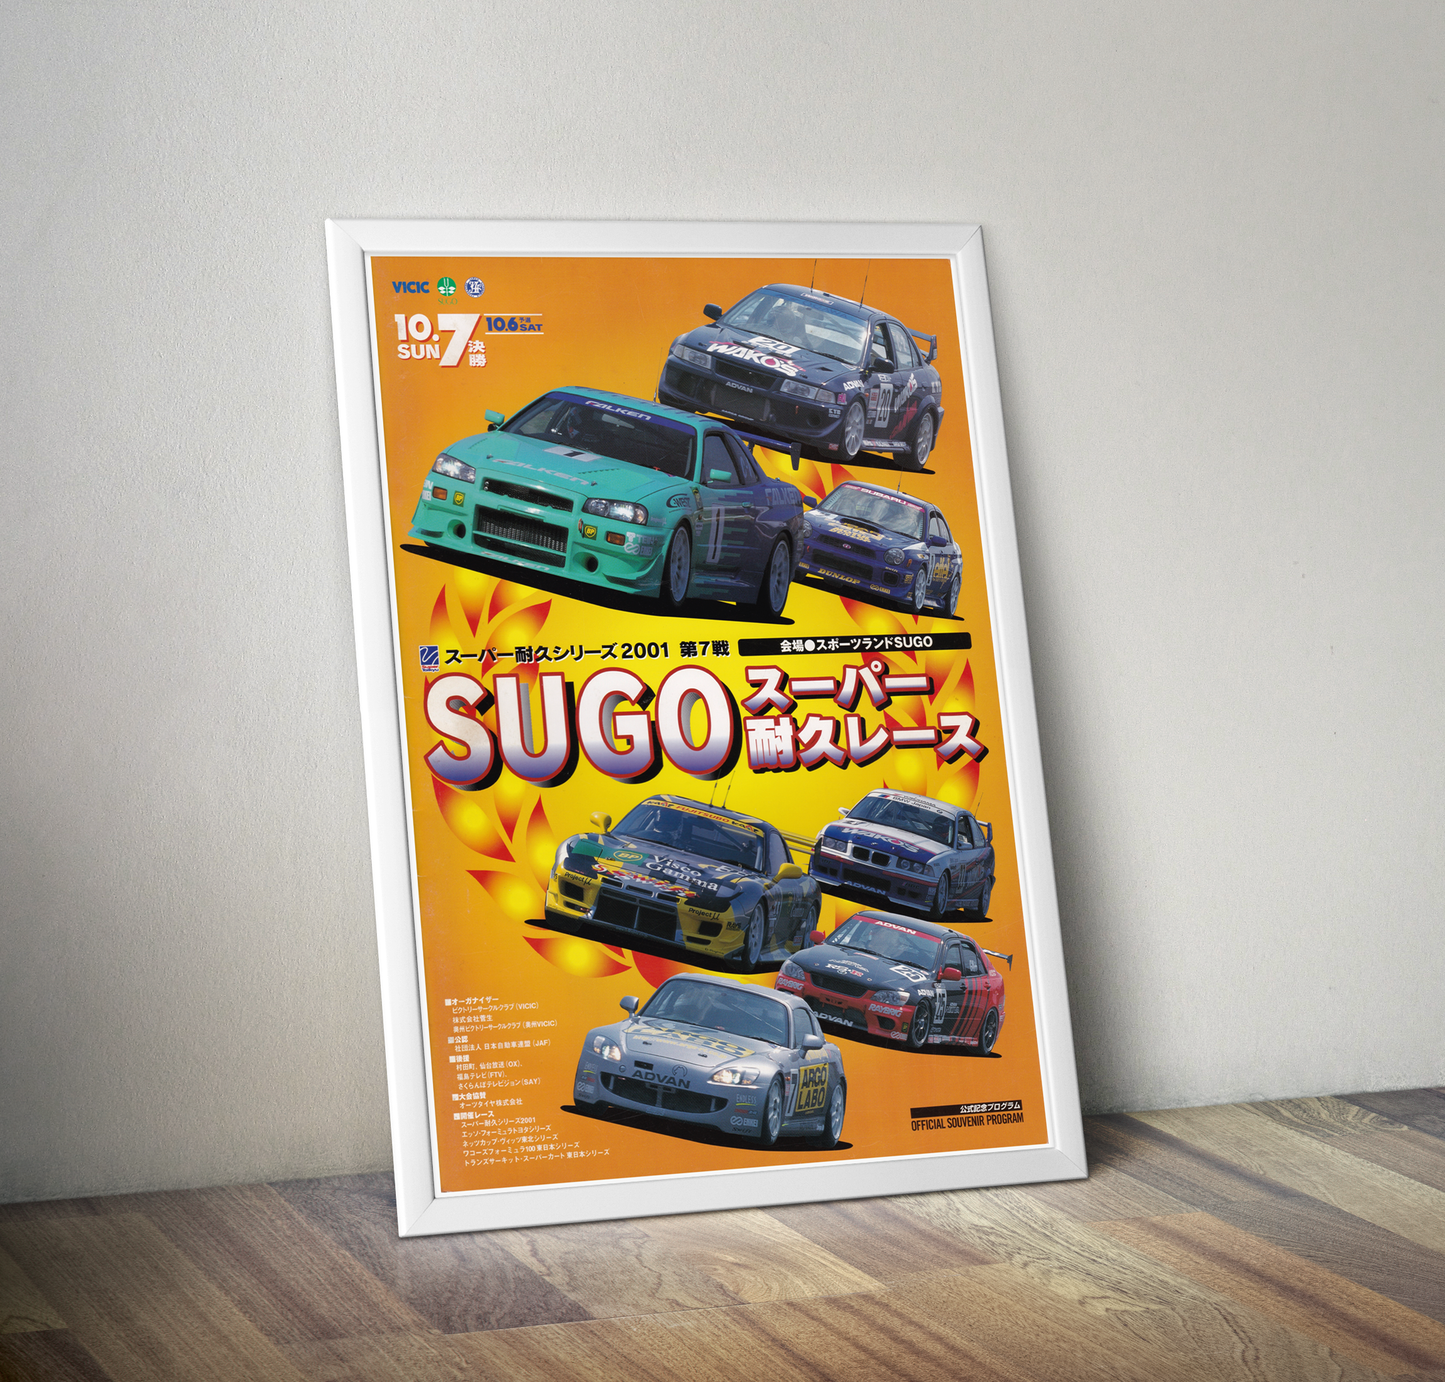 Super Taikyu Sugu 2001 poster